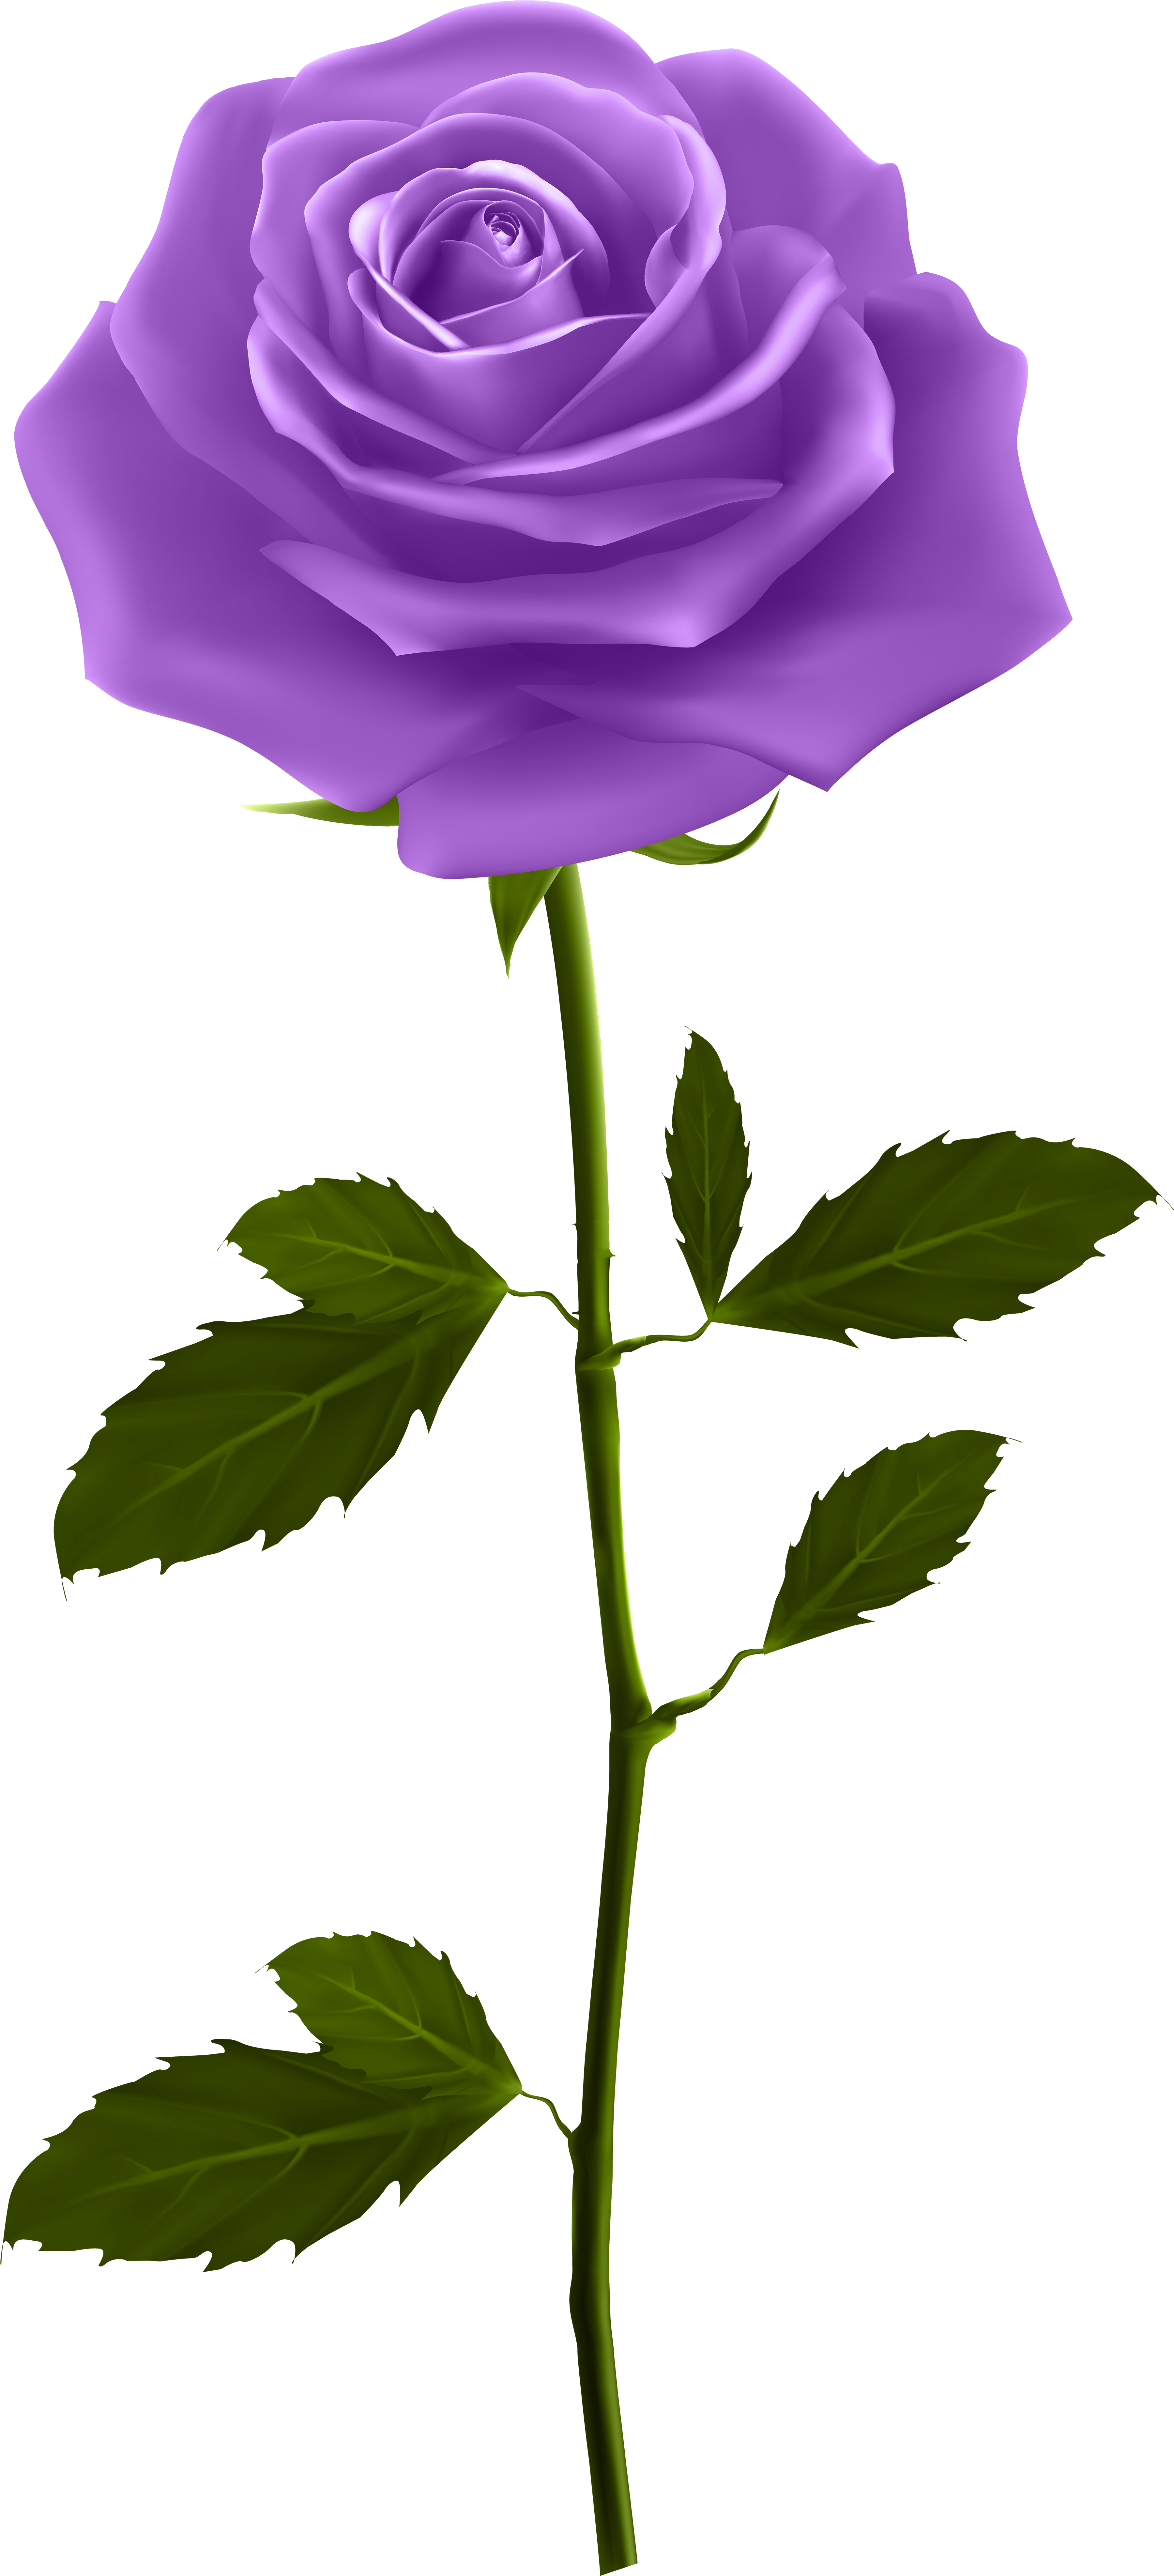 Purple Rose With Stem Png Clip Art Image Ðîçû - Good Morning Gif For Whatsapp (3740x8000)